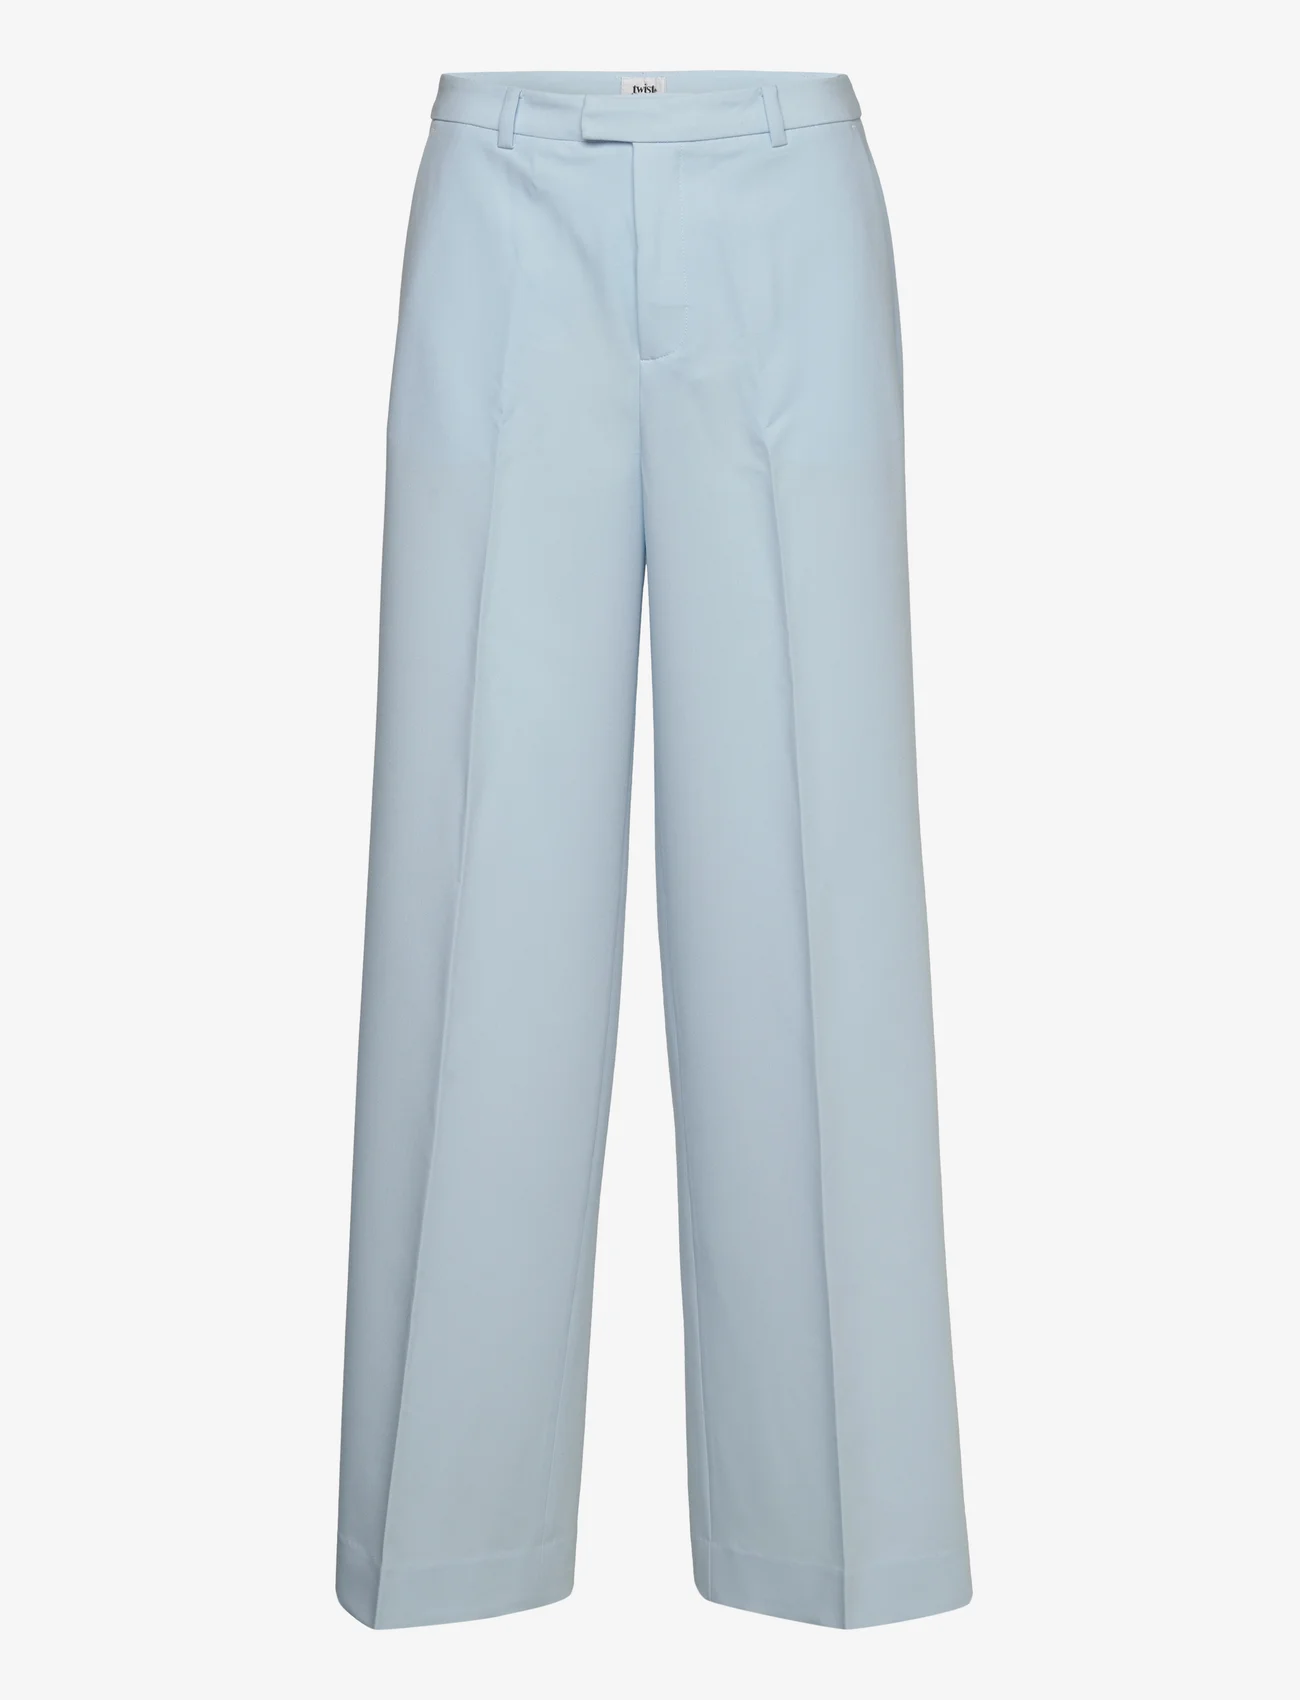 Twist & Tango - Portia Trousers - ballīšu apģērbs par outlet cenām - blue breeze - 0